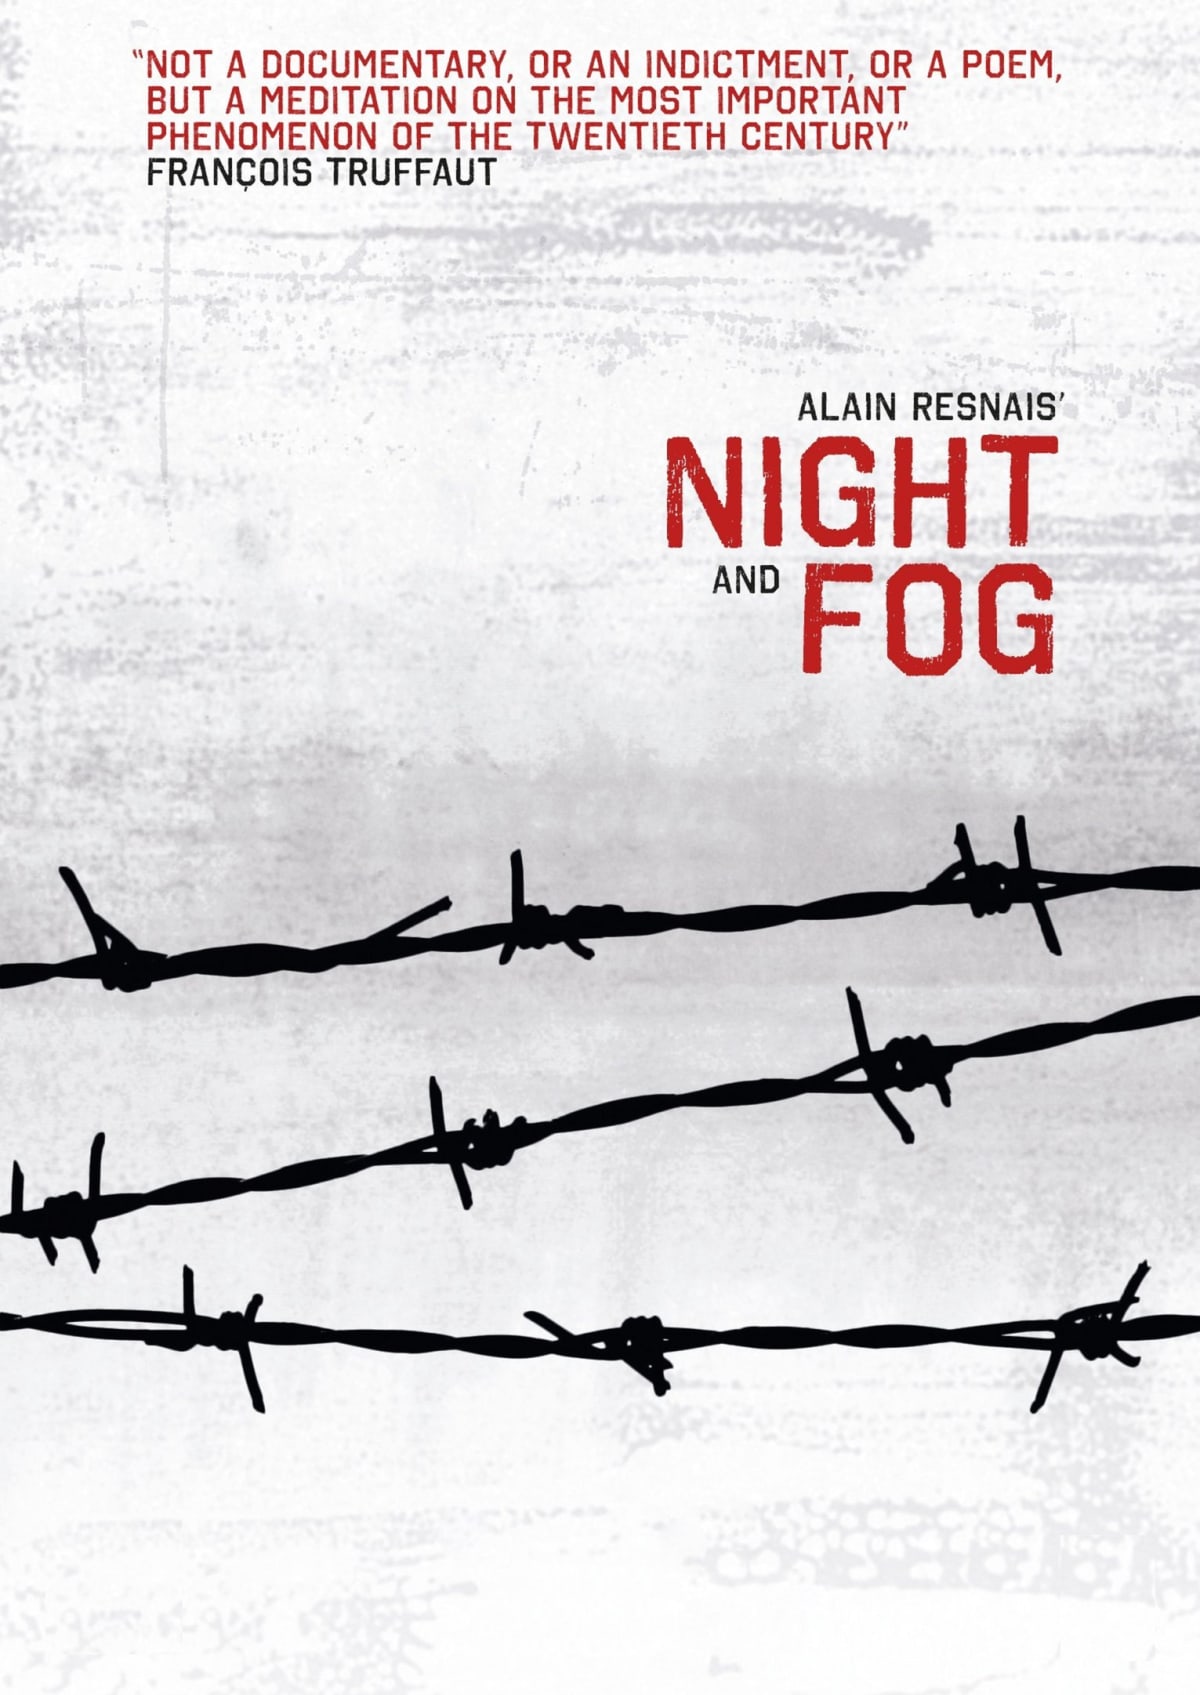 One night screening of "Night & Fog" by Alain Resnais